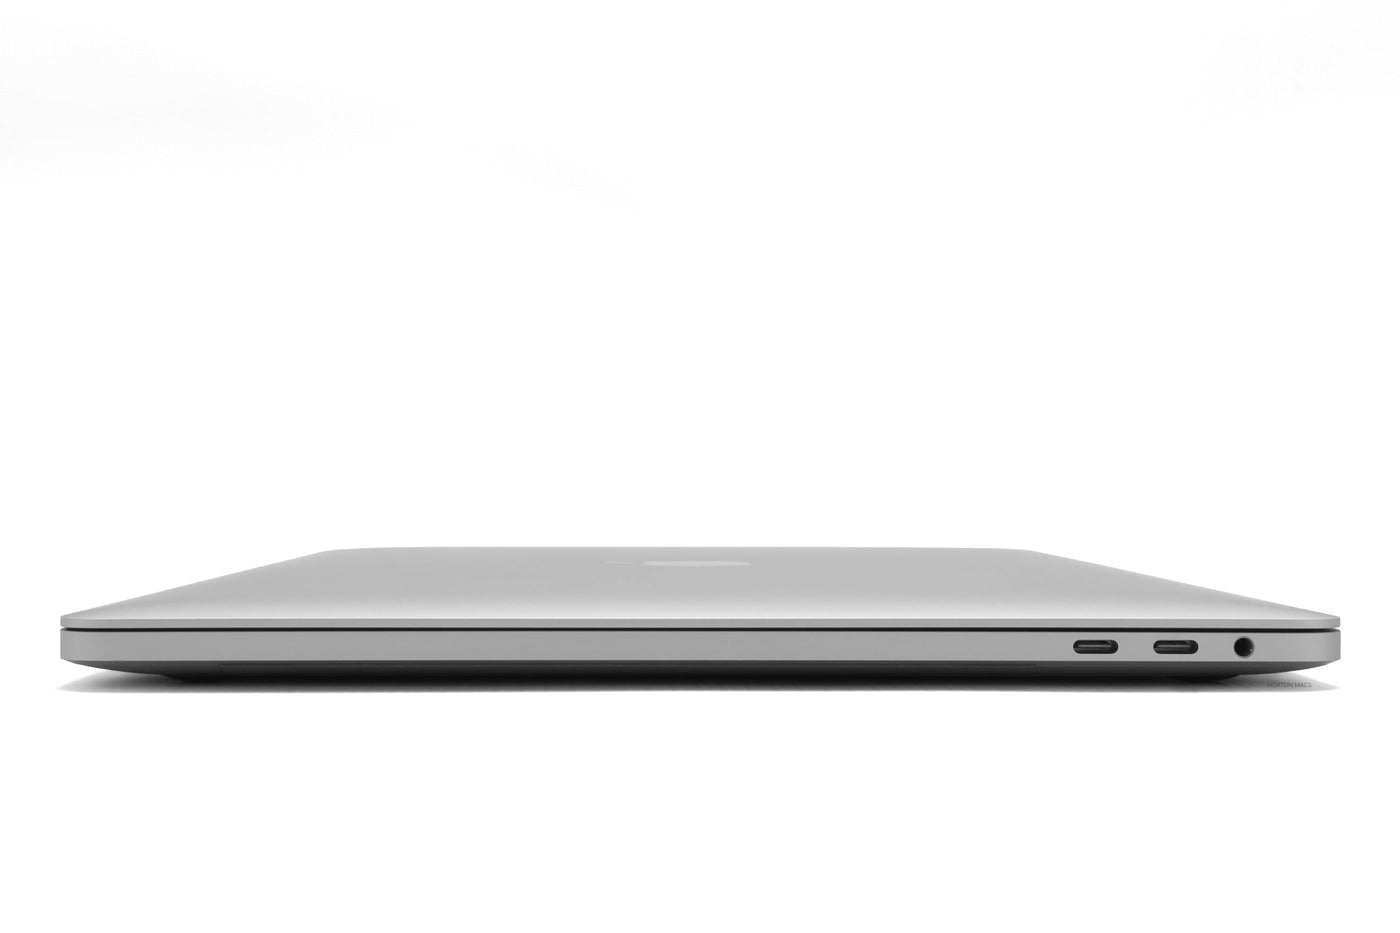 Apple MacBook Pro 15-inch MacBook Pro 15-inch Core i7 2.6GHz (Silver, 2019) - Fair